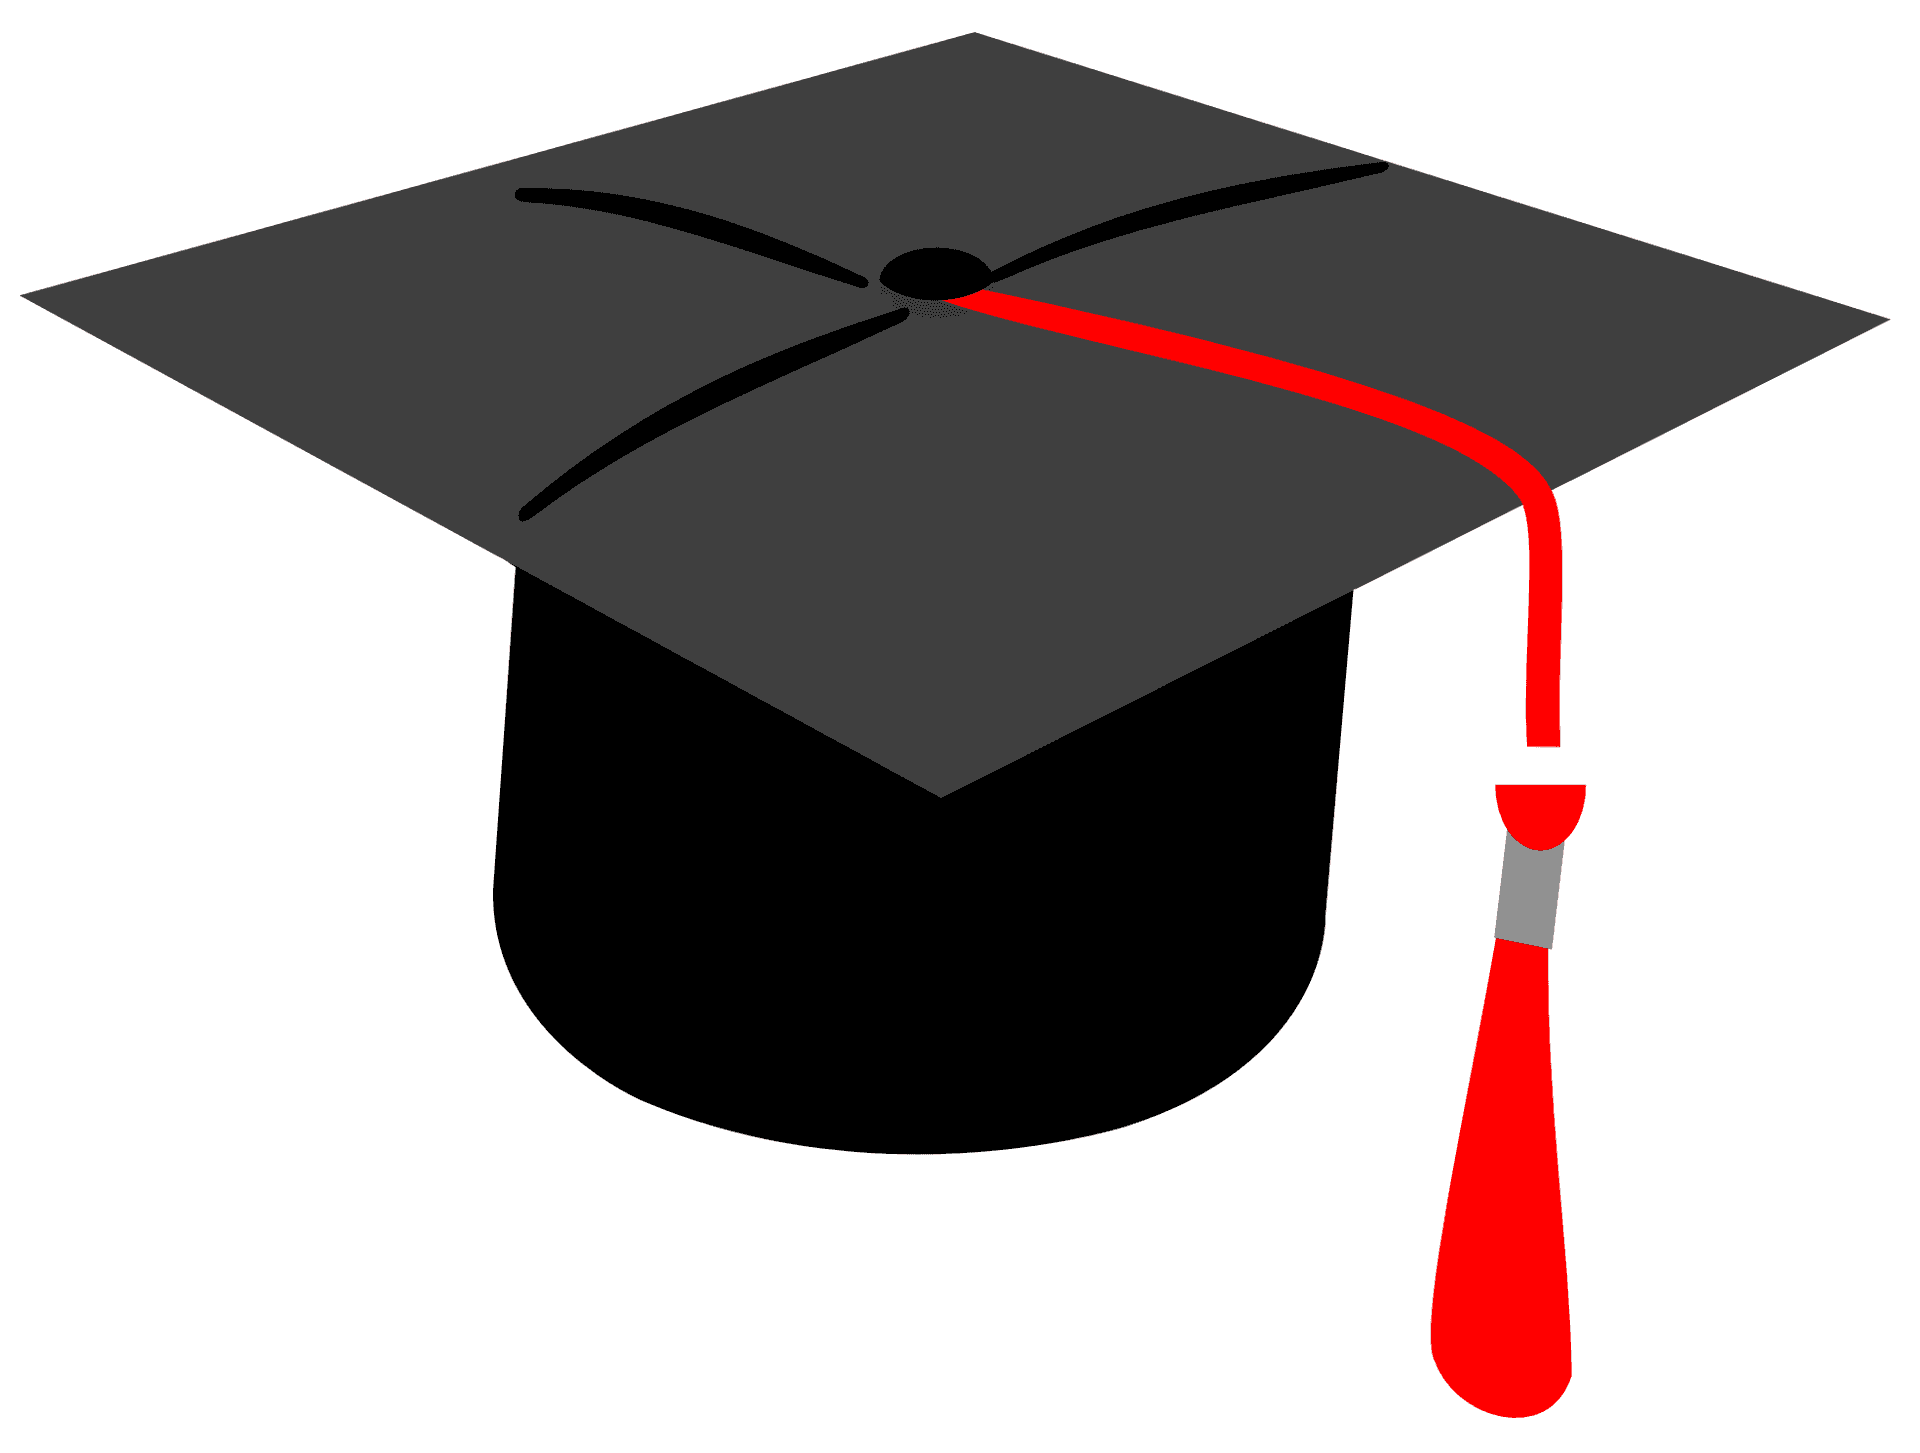 Graduation Cap Icon PNG image